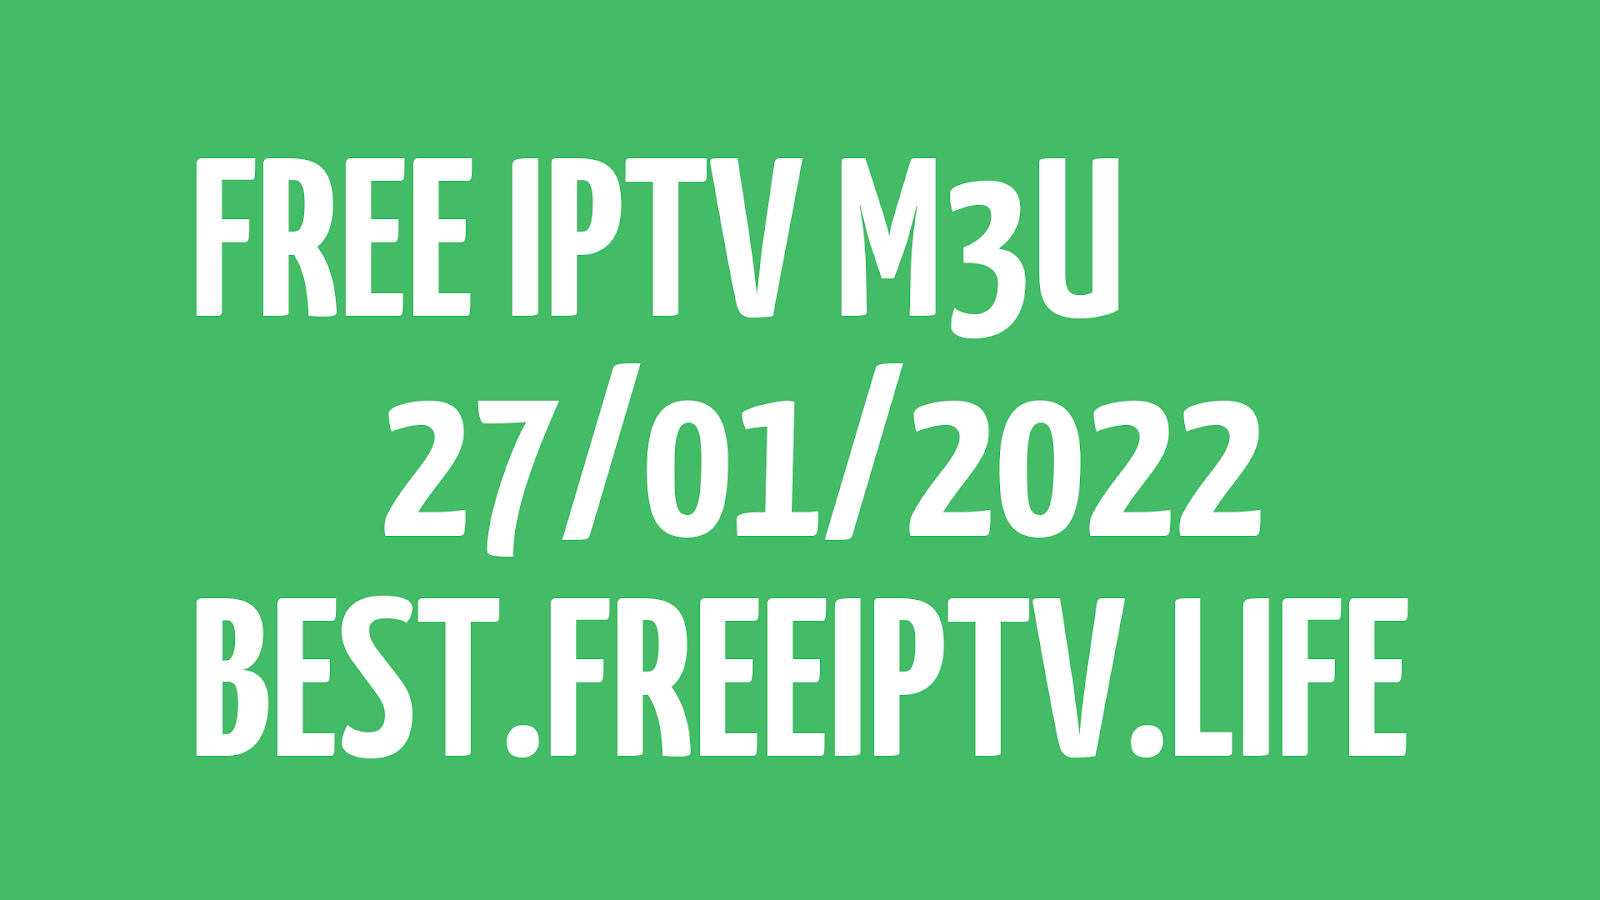 Free Iptv M3u Playlist Latest Posts - FREE IPTV LINKS BEST DAILY M3U PLAYLISTS TV 2023